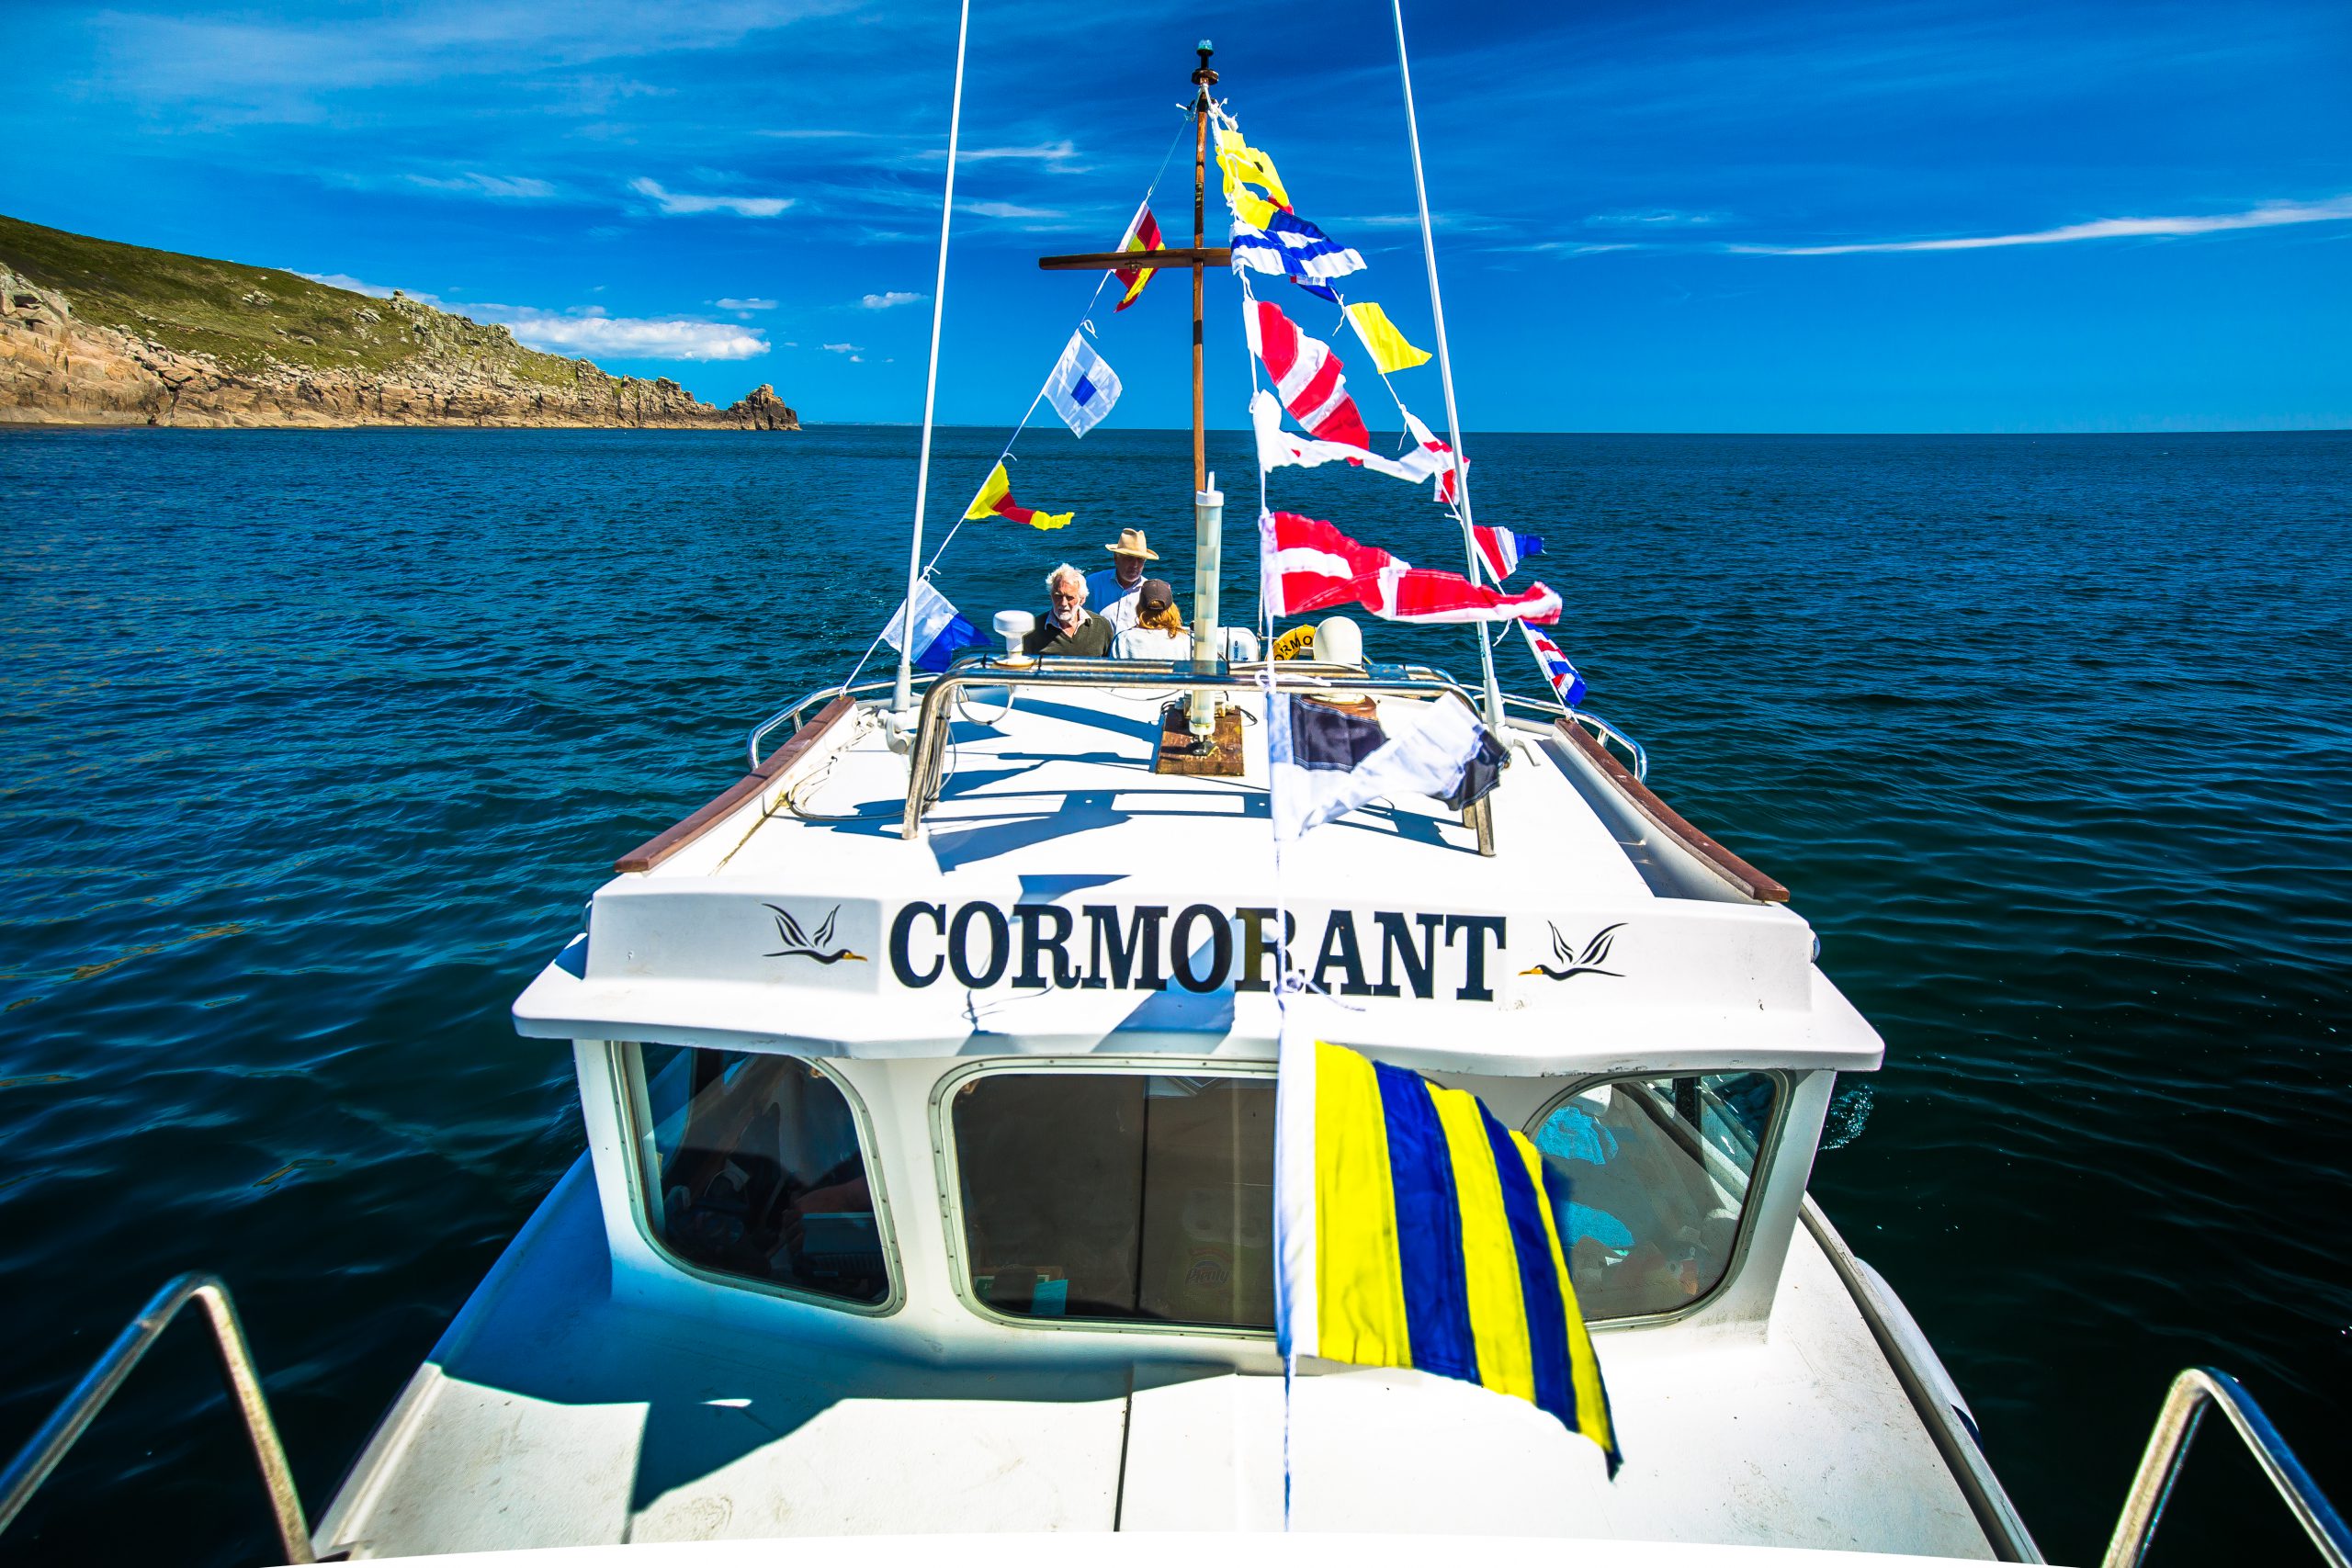 The Cormorant on a coastal cruise in the summer sunshine.